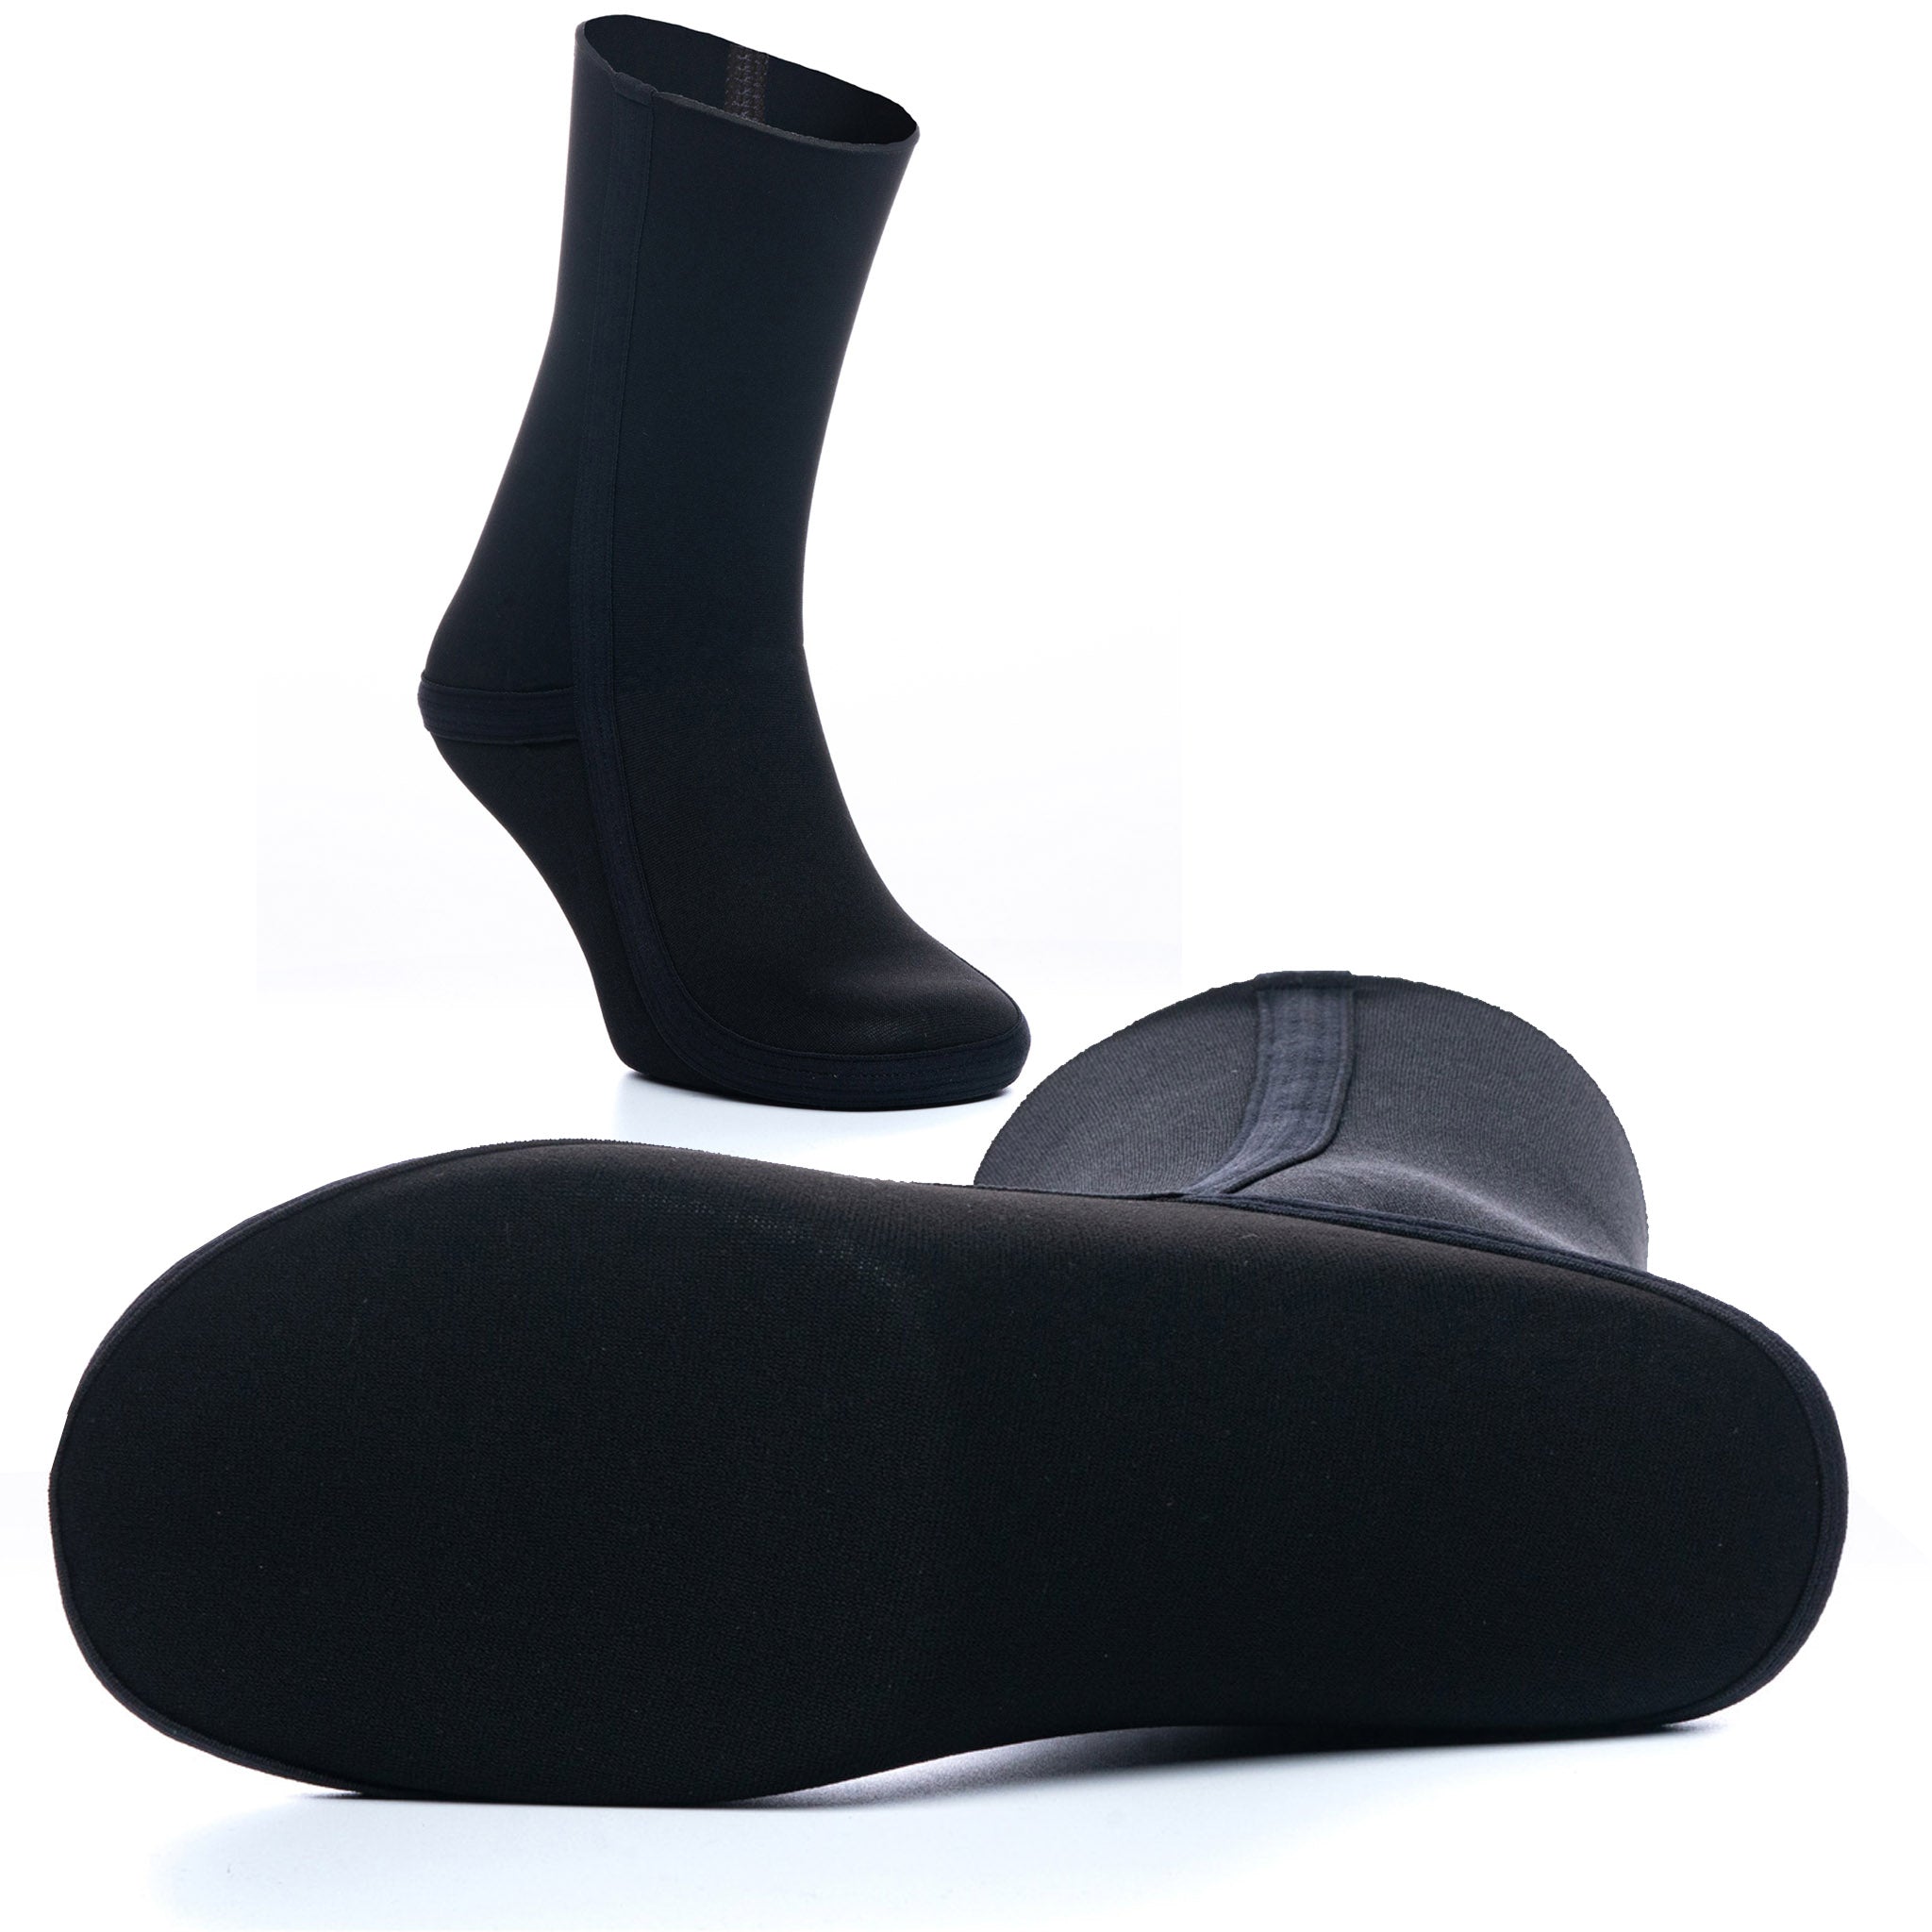 C-Skins 2.5mm Neoprene Wetsuit Socks Sole & Bound Seam